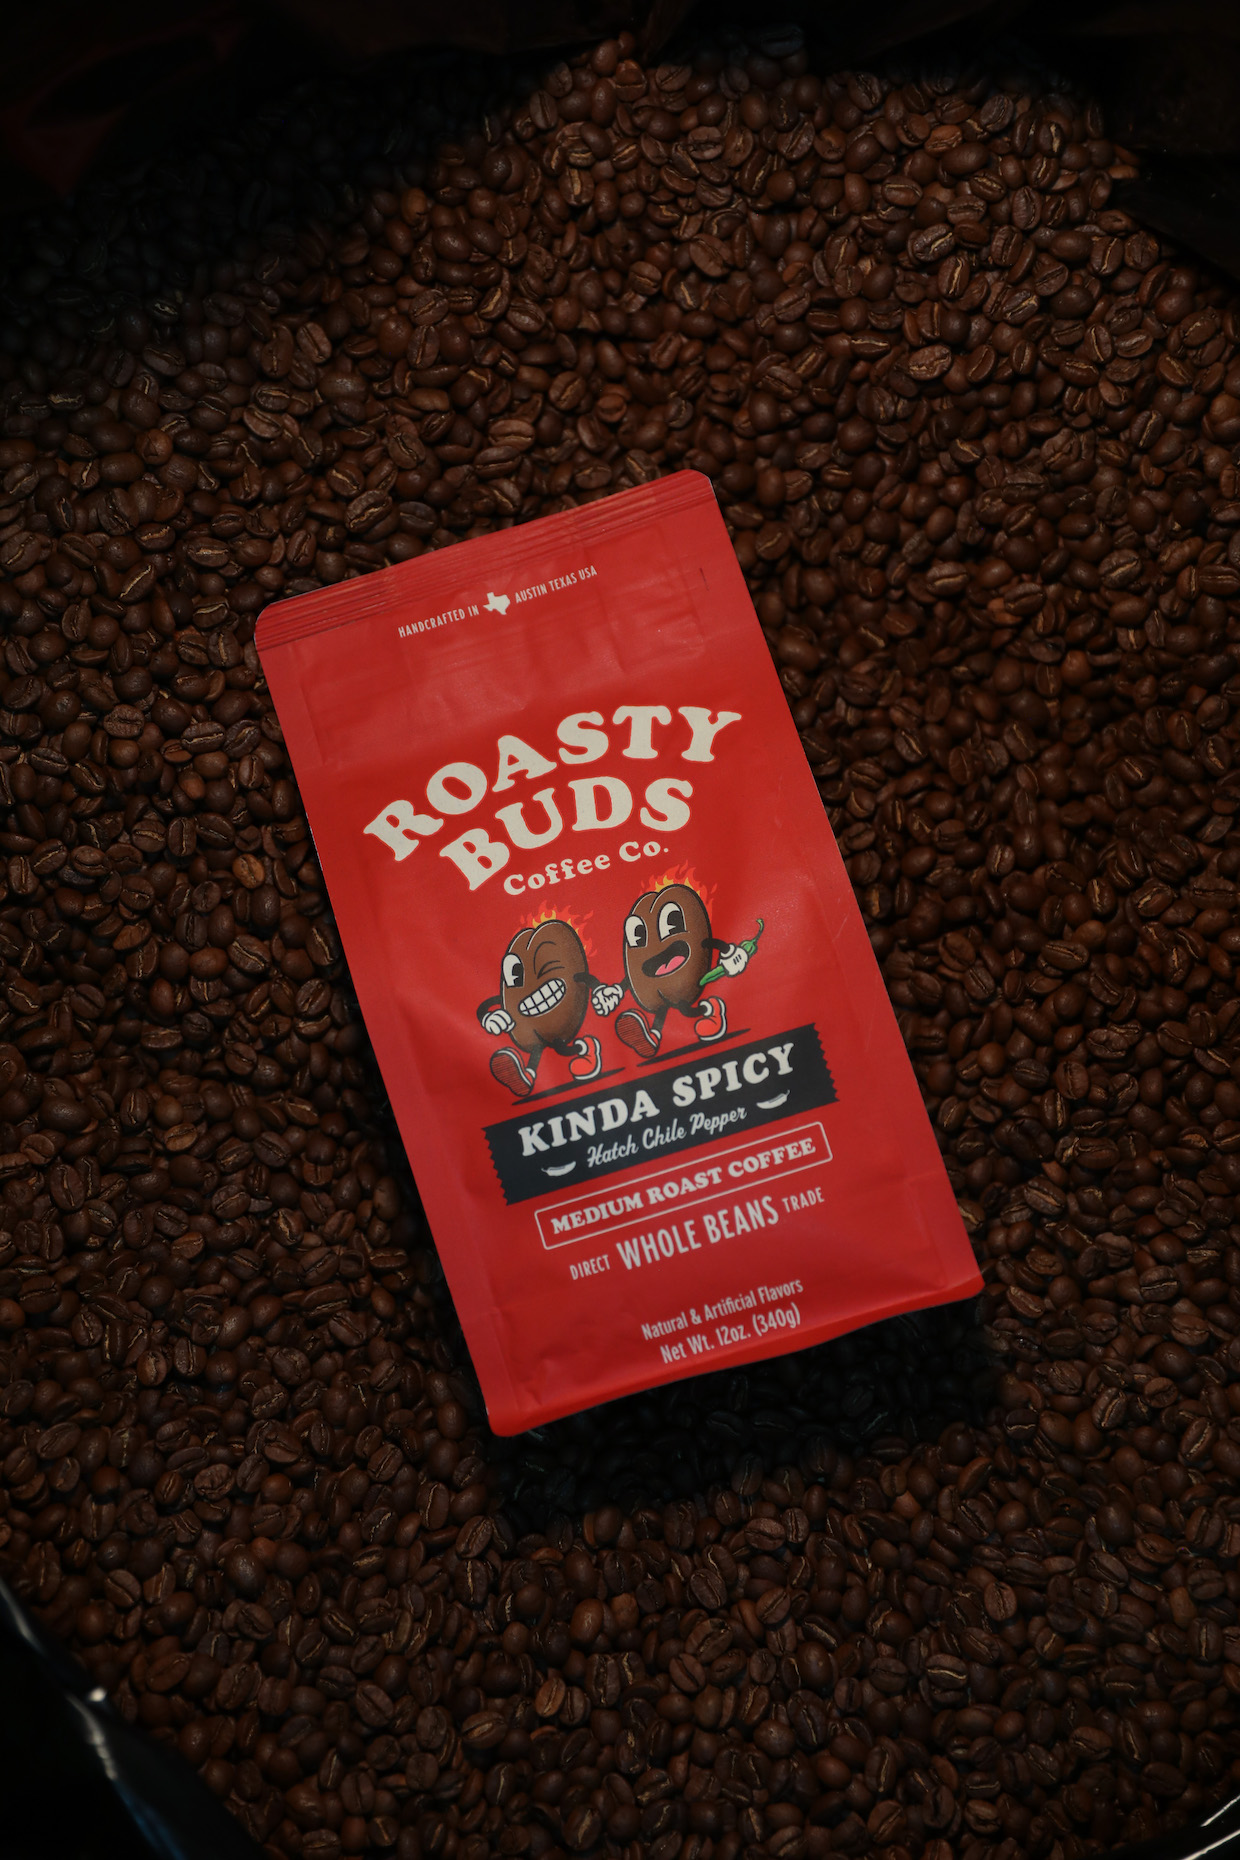 Roasty Buds kaffe